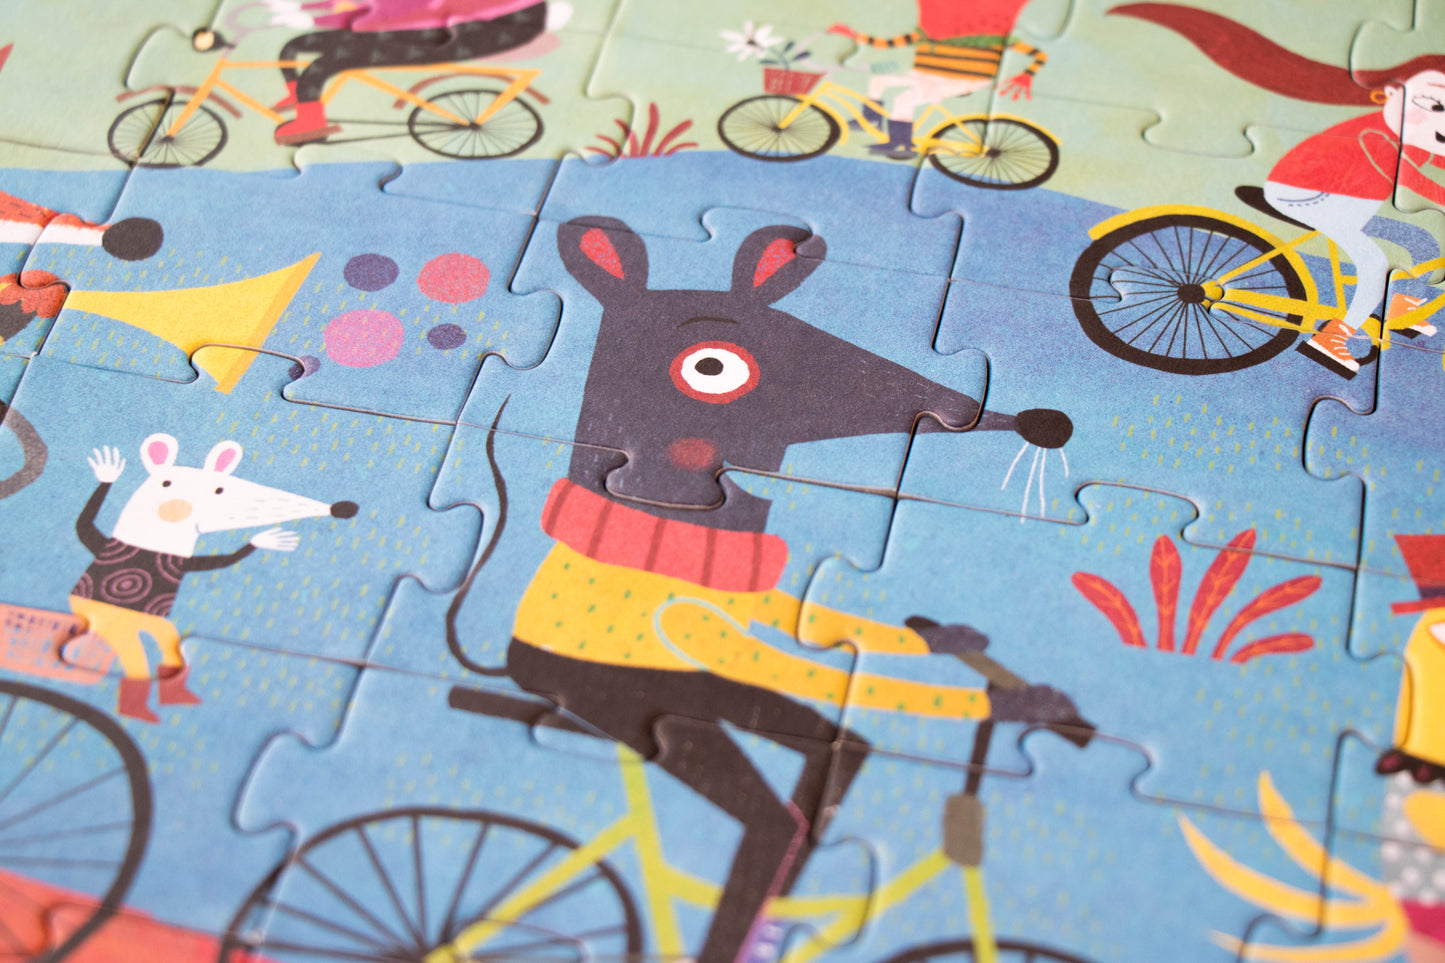 Londji - Bicicletta Pocket puzzle